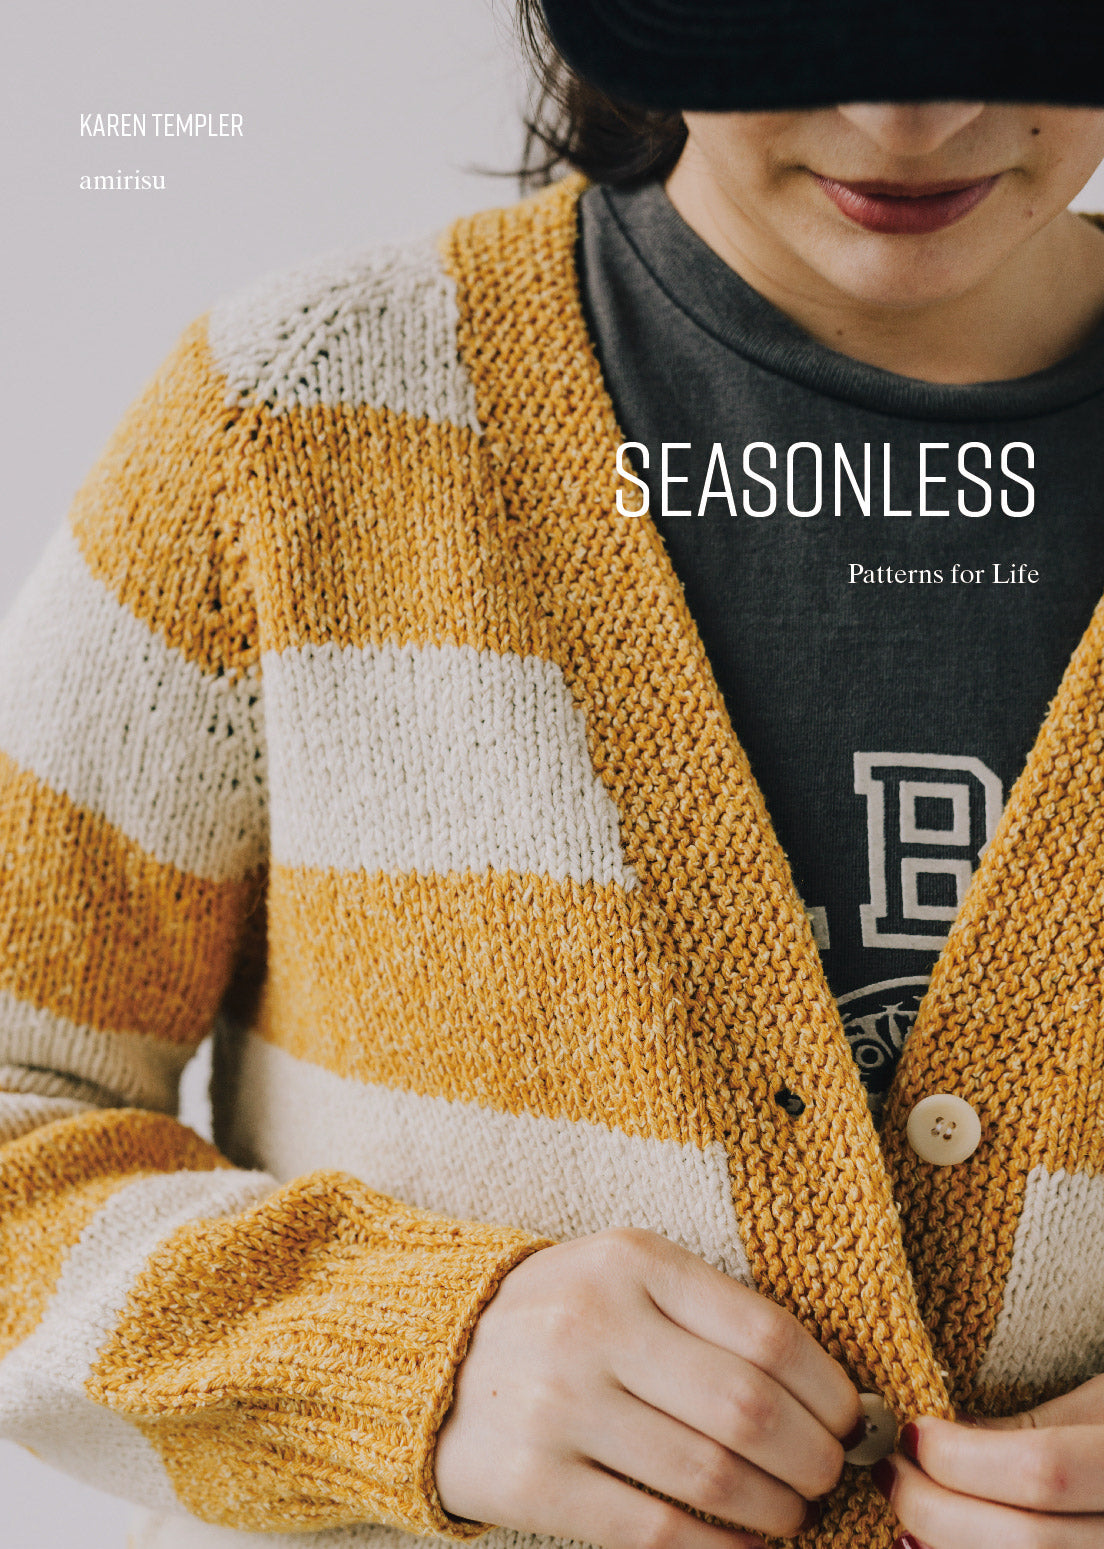 Seasonless - Patterns for Life – amirisu kurumi